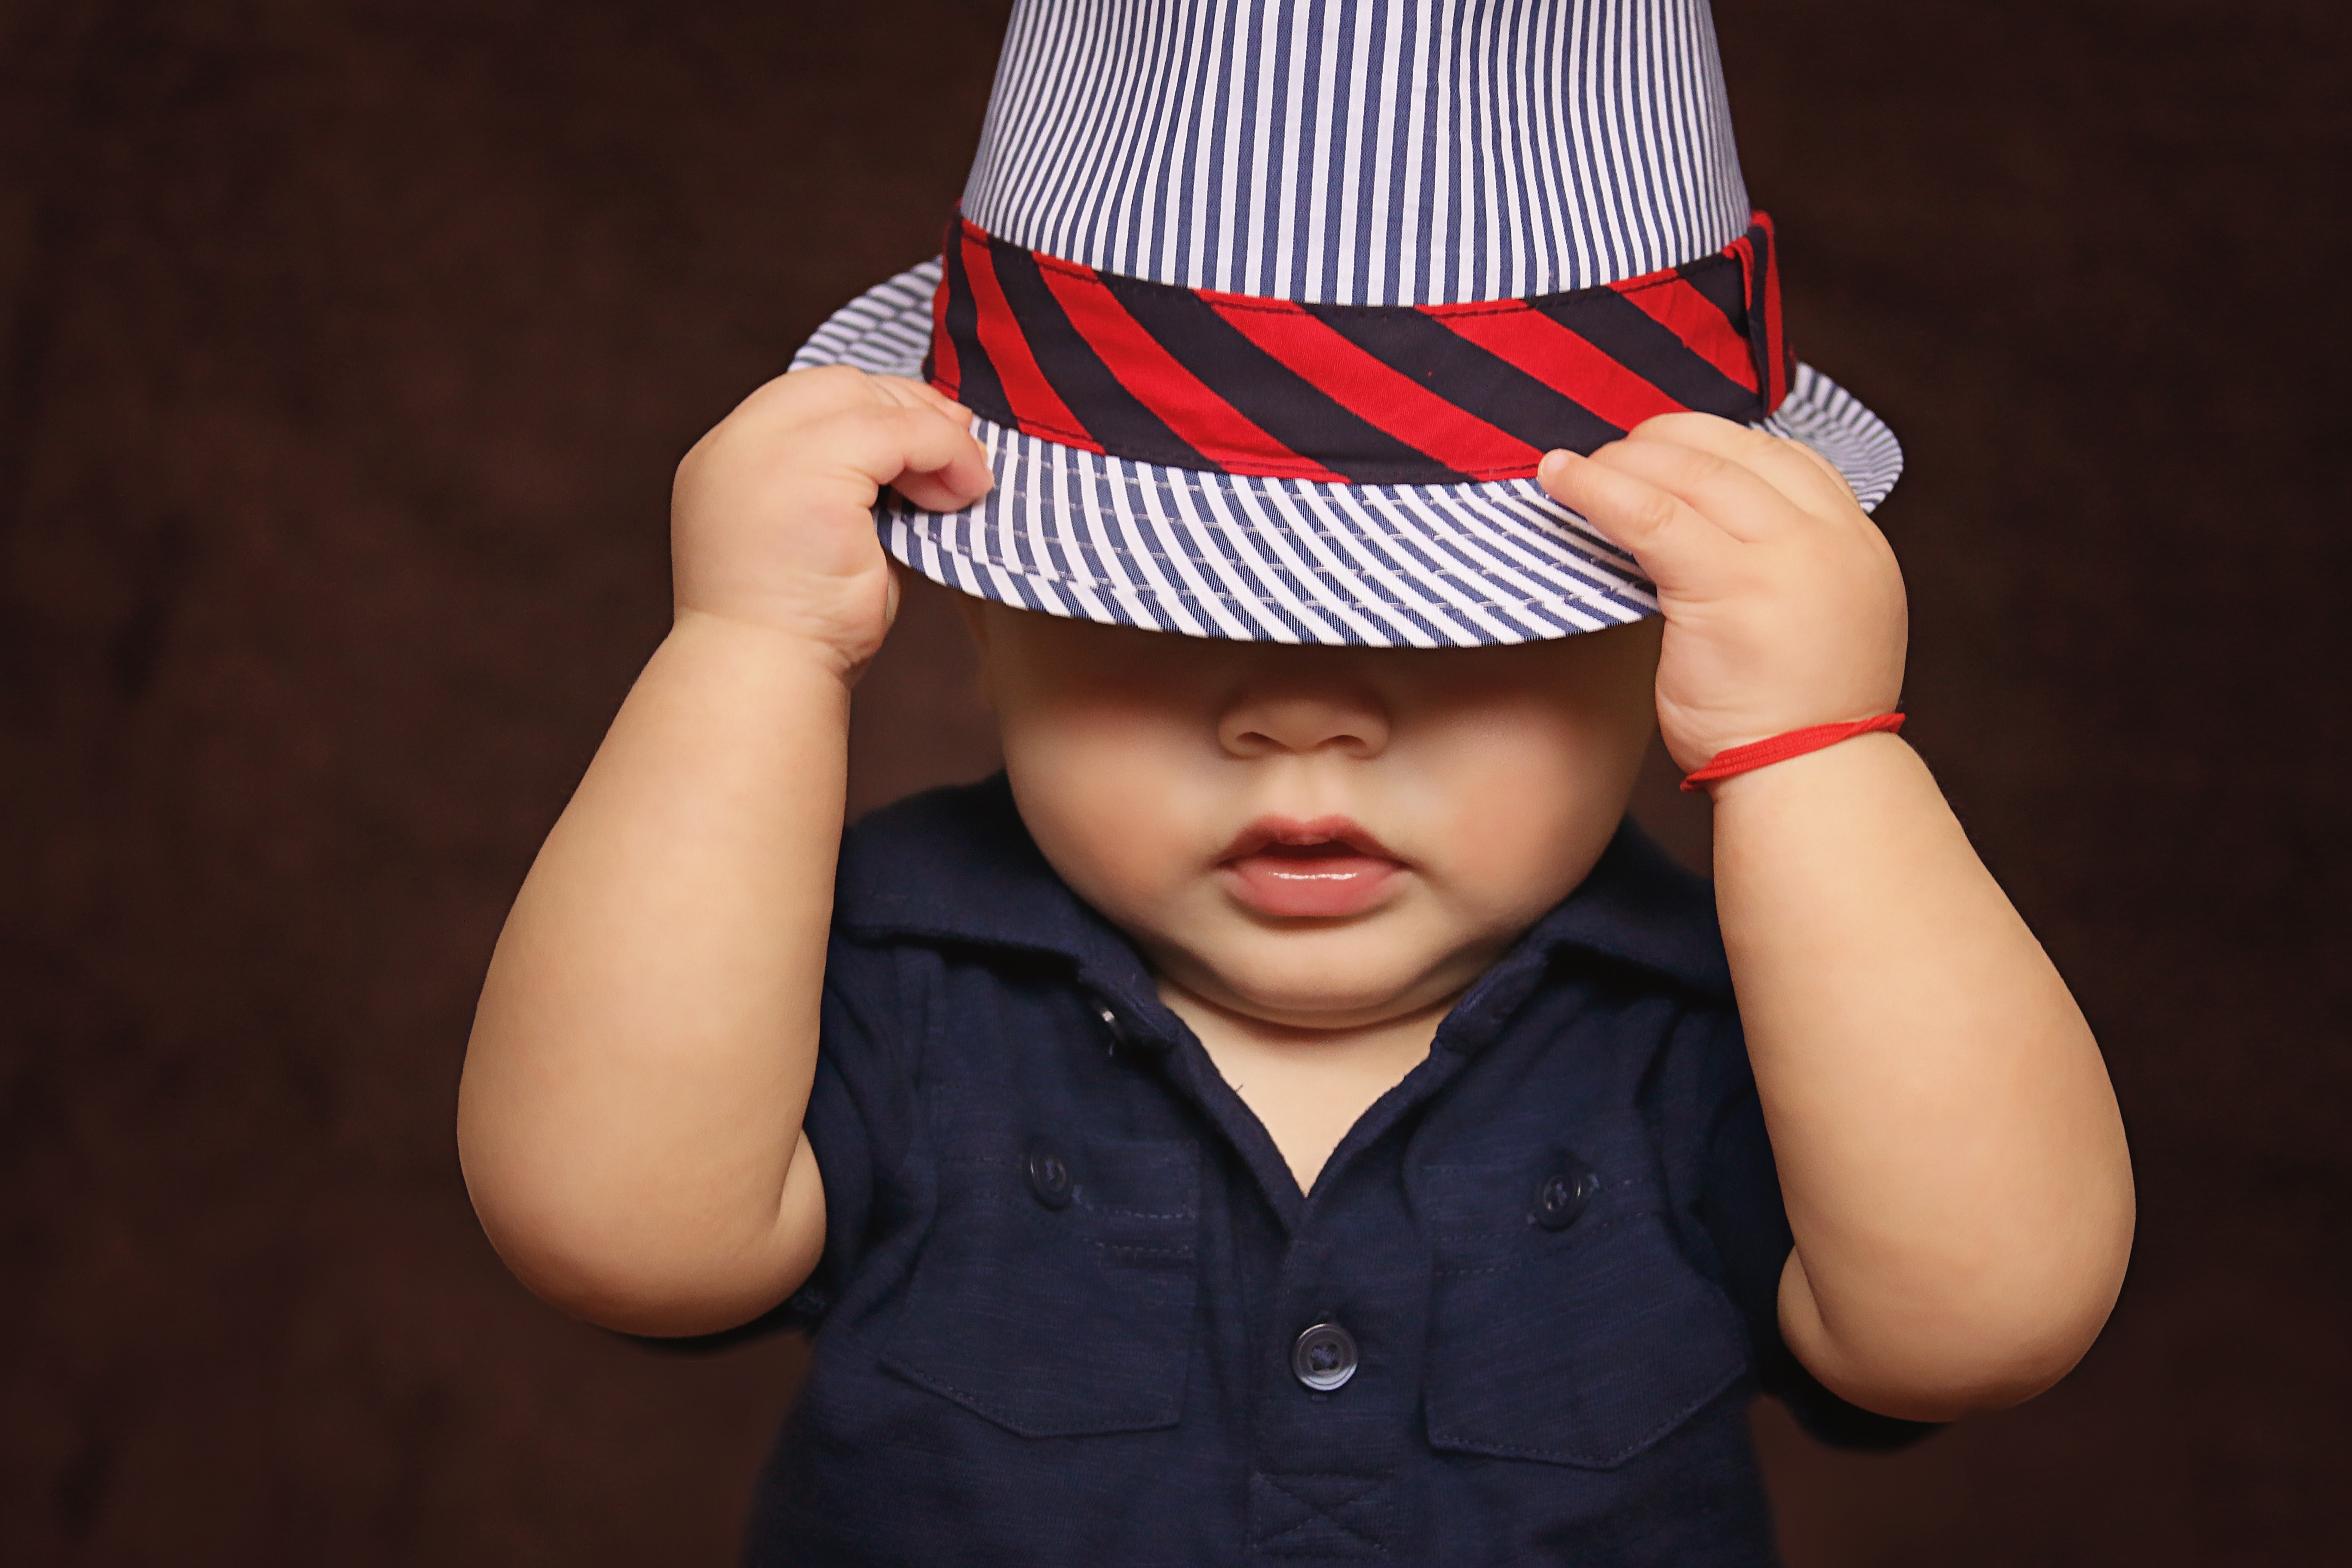 Best Cute Baby Boy Image · 100% Free Downloads